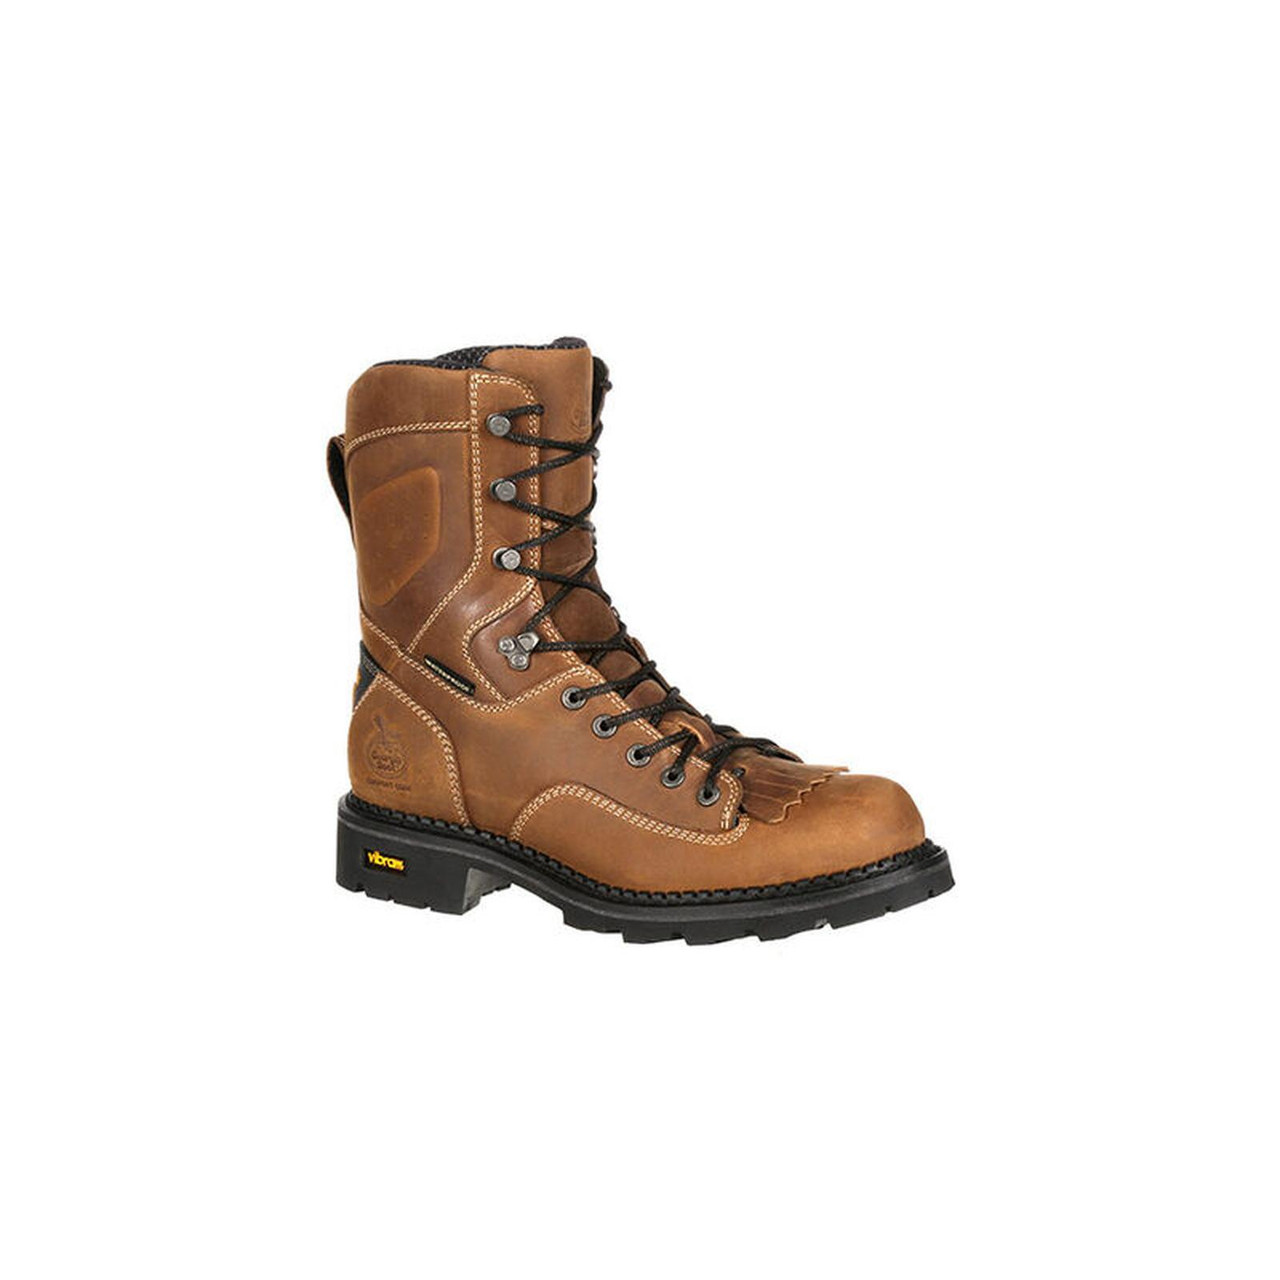 Brown Work Boots, Unisex Style 600 - Blundstone New Zealand